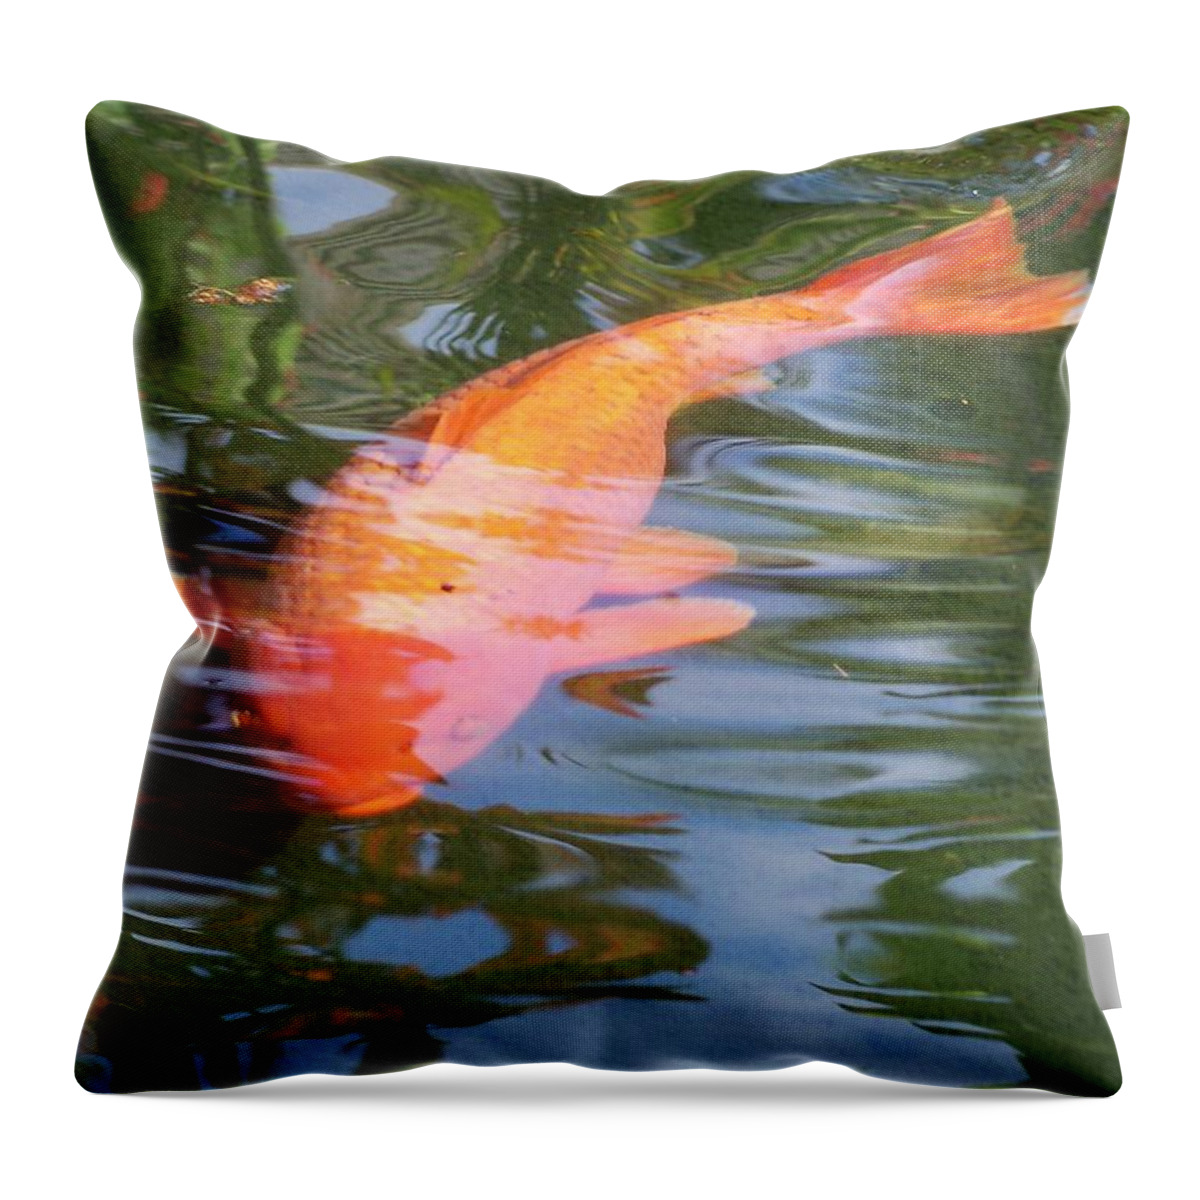 Golfish Throw Pillow featuring the photograph Goldfish by Cornelia DeDona